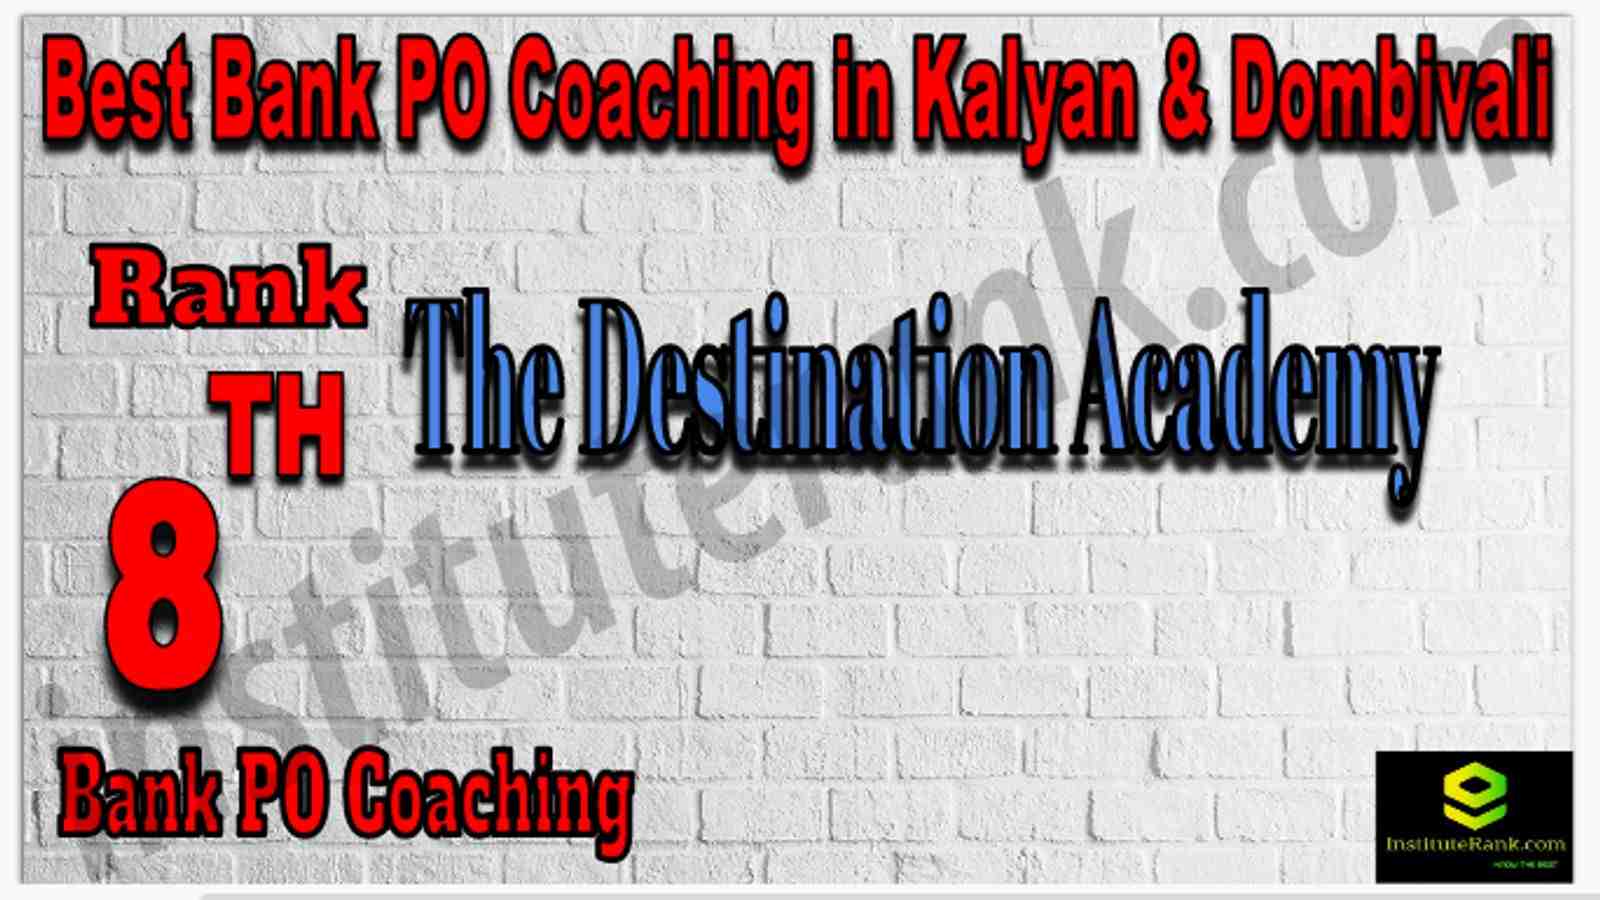 Rank 8th Best Bank PO Coaching in Kalyan & Dombivali